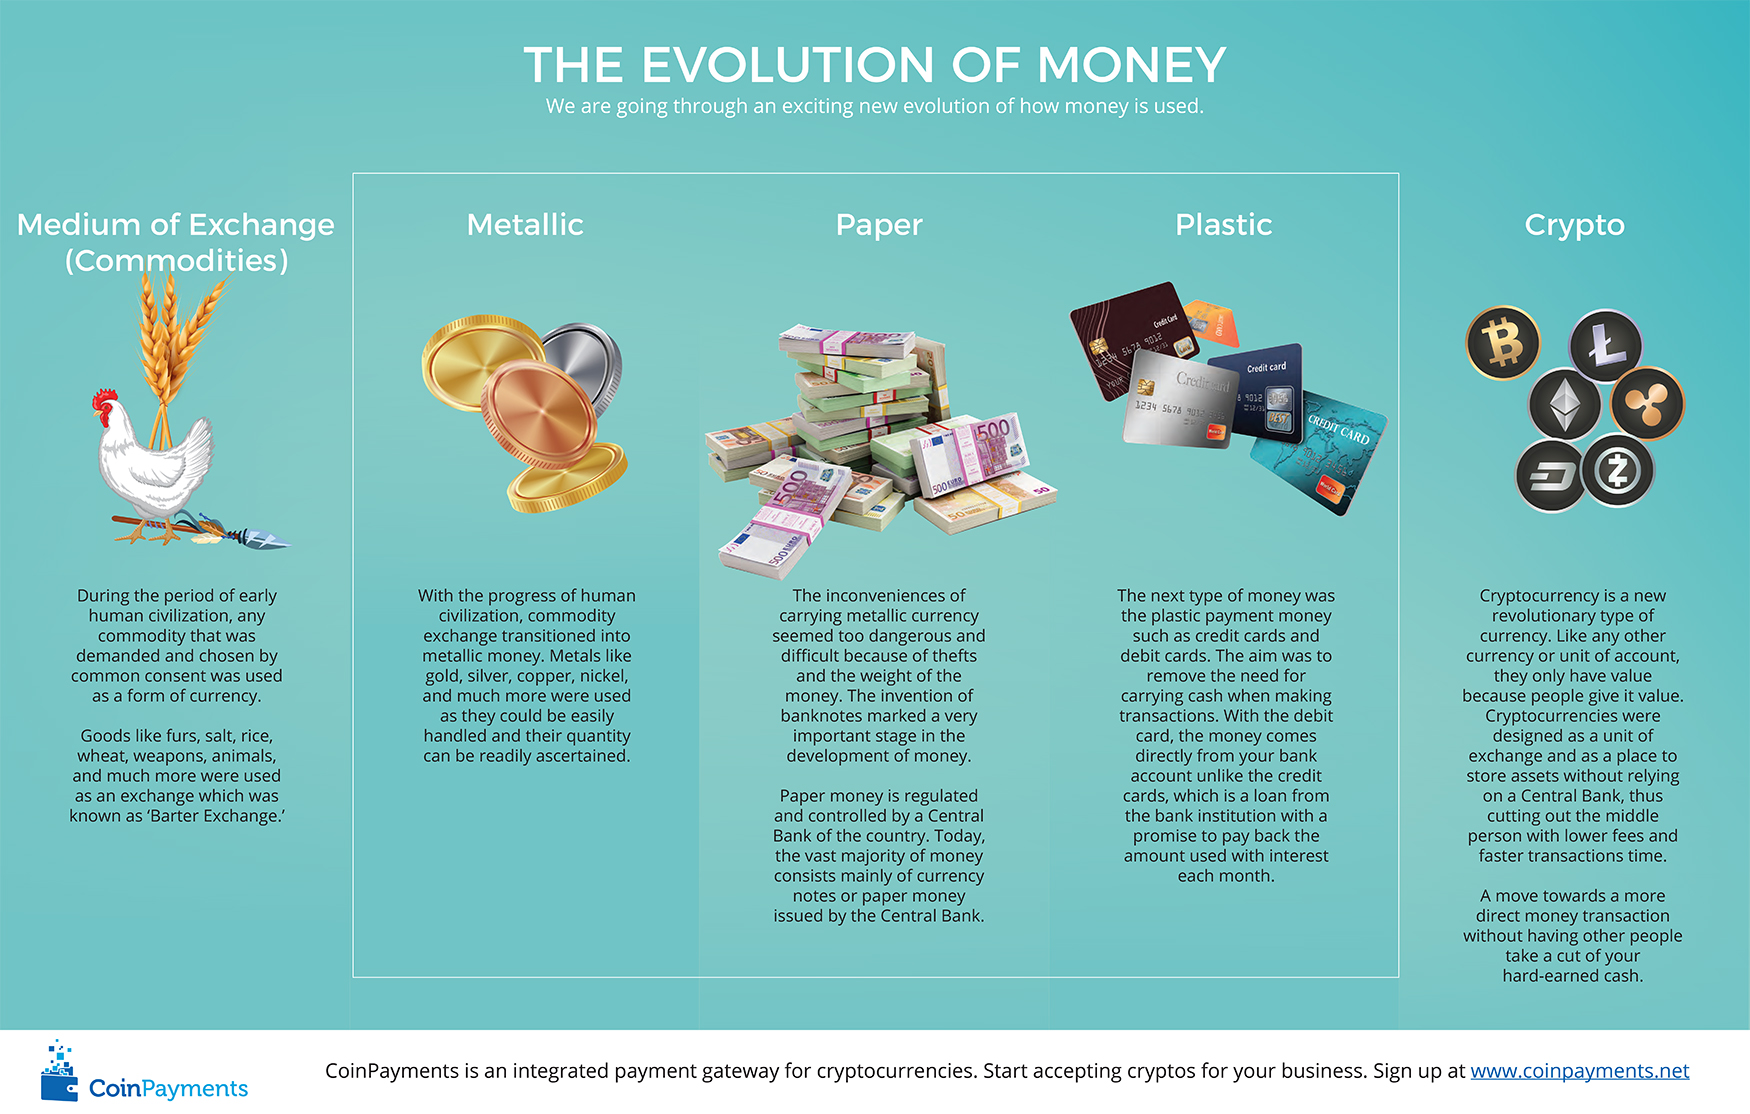 essay on evolution of money